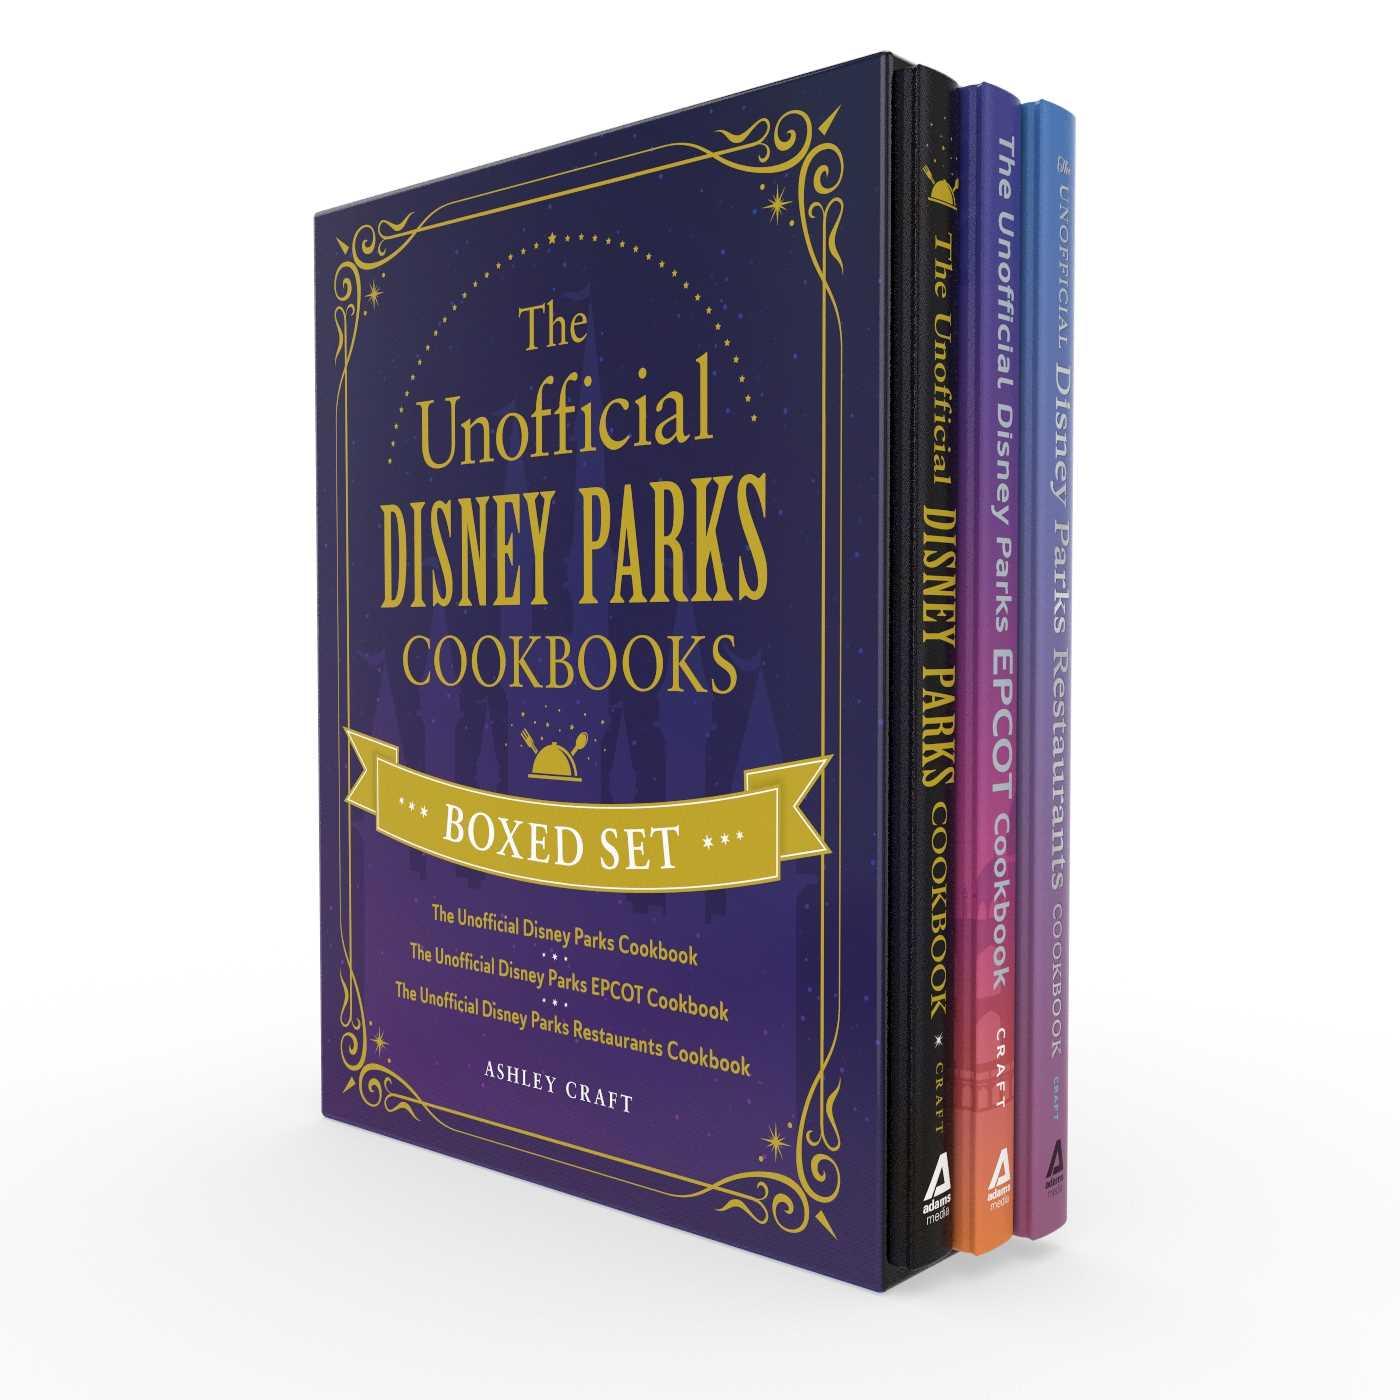 Book The Unofficial Disney Parks Cookbooks Boxed Set: The Unofficial Disney Parks Cookbook, the Unofficial Disney Parks EPCOT Cookbook, the Unofficial Disn 